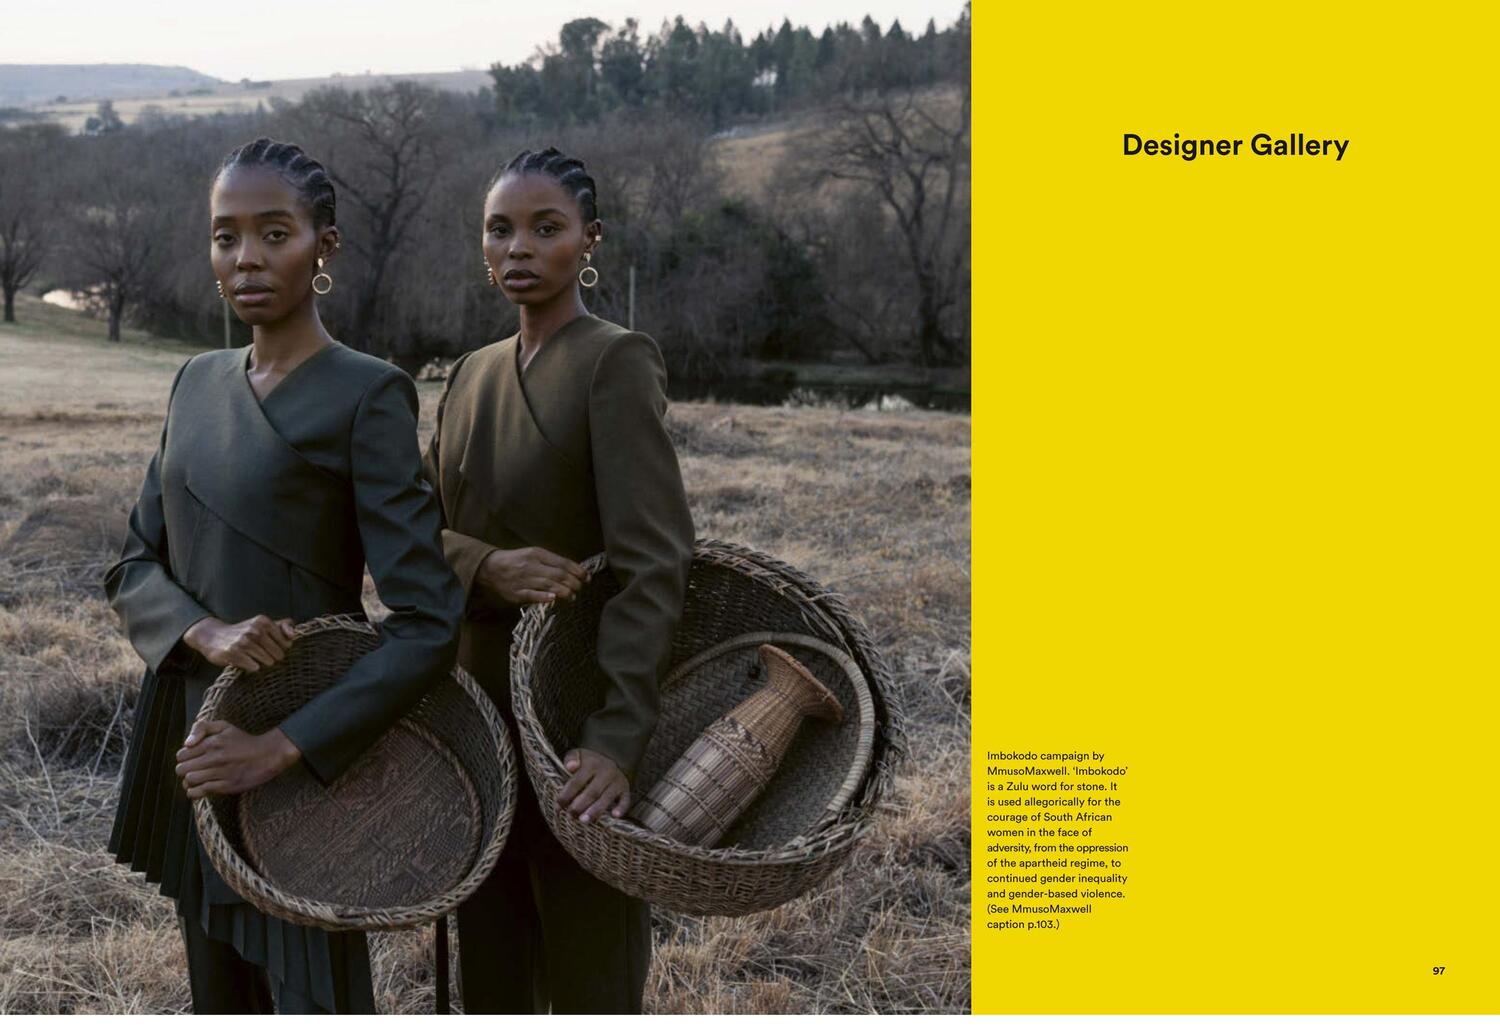 Bild: 9783038762447 | Afrika in Mode | Luxus, Handwerk und textiles Erbe | Ken Kweku Nimo